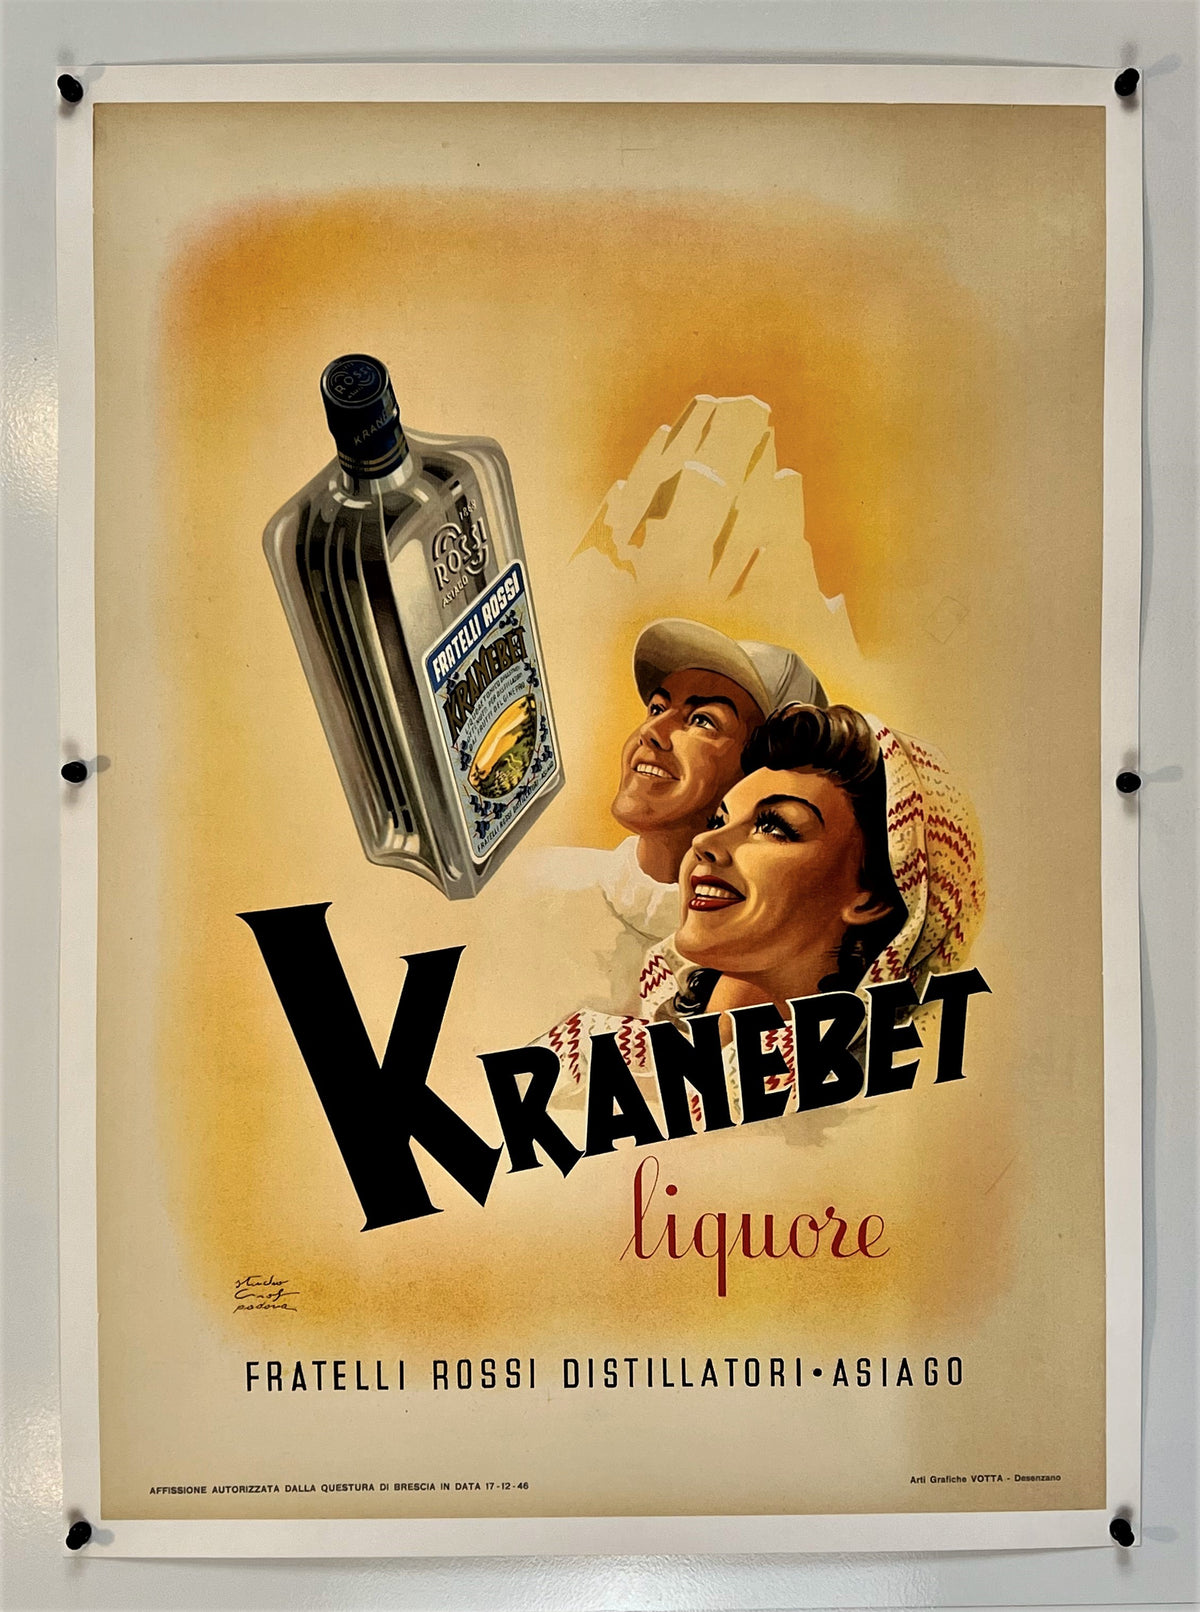 Kranebet Liquore - Authentic Vintage Poster